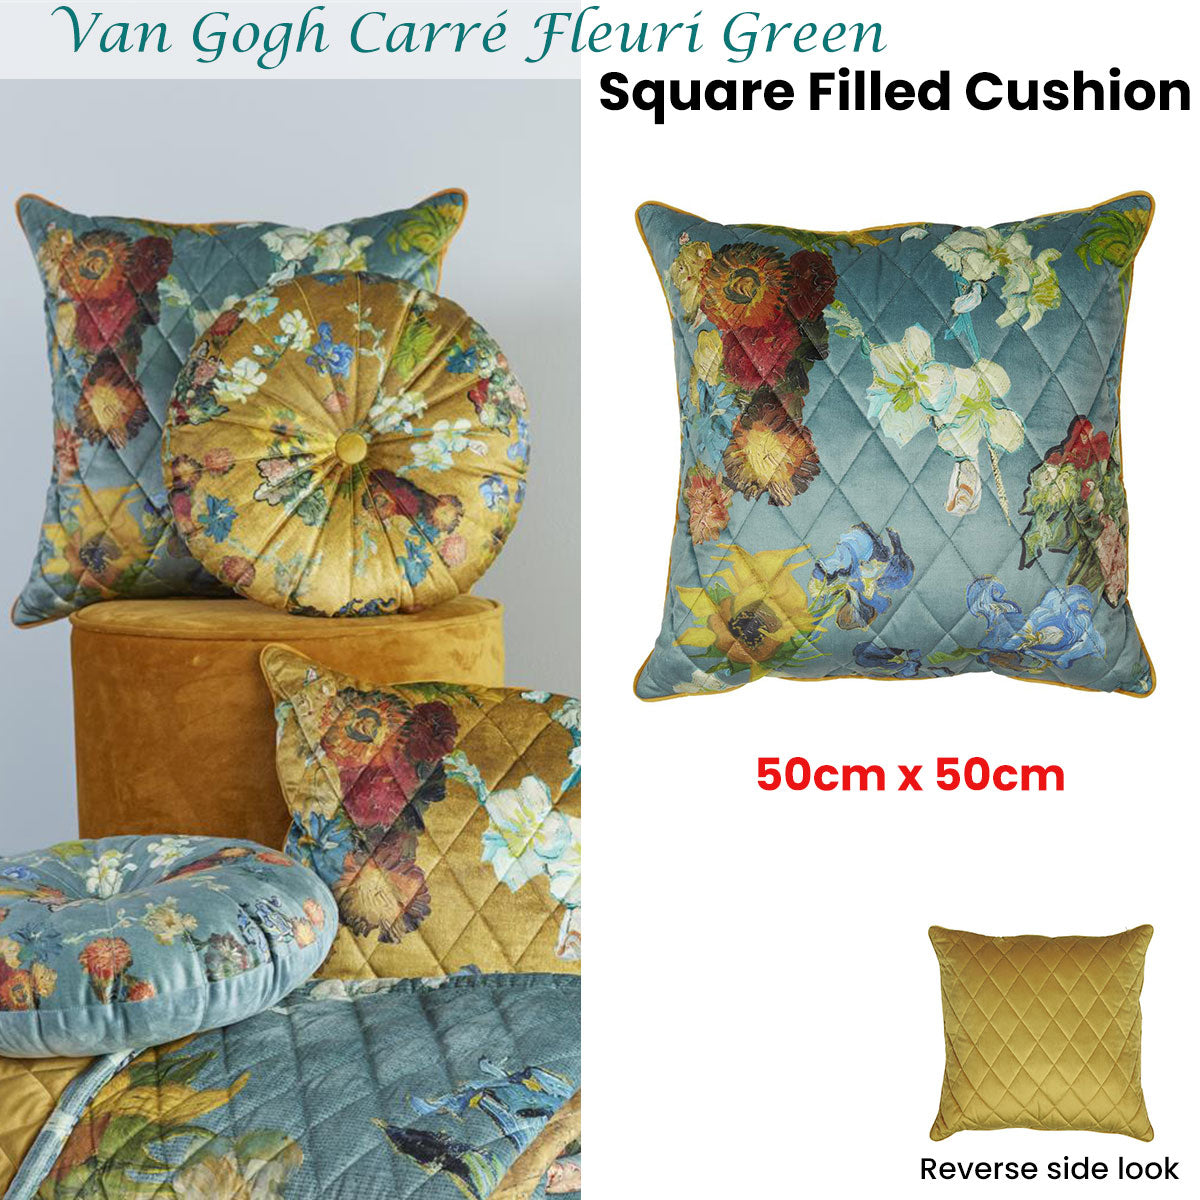 Bedding House Van Gogh Carre Fleuri Green Square Filled Cushion 50cm x 50cm